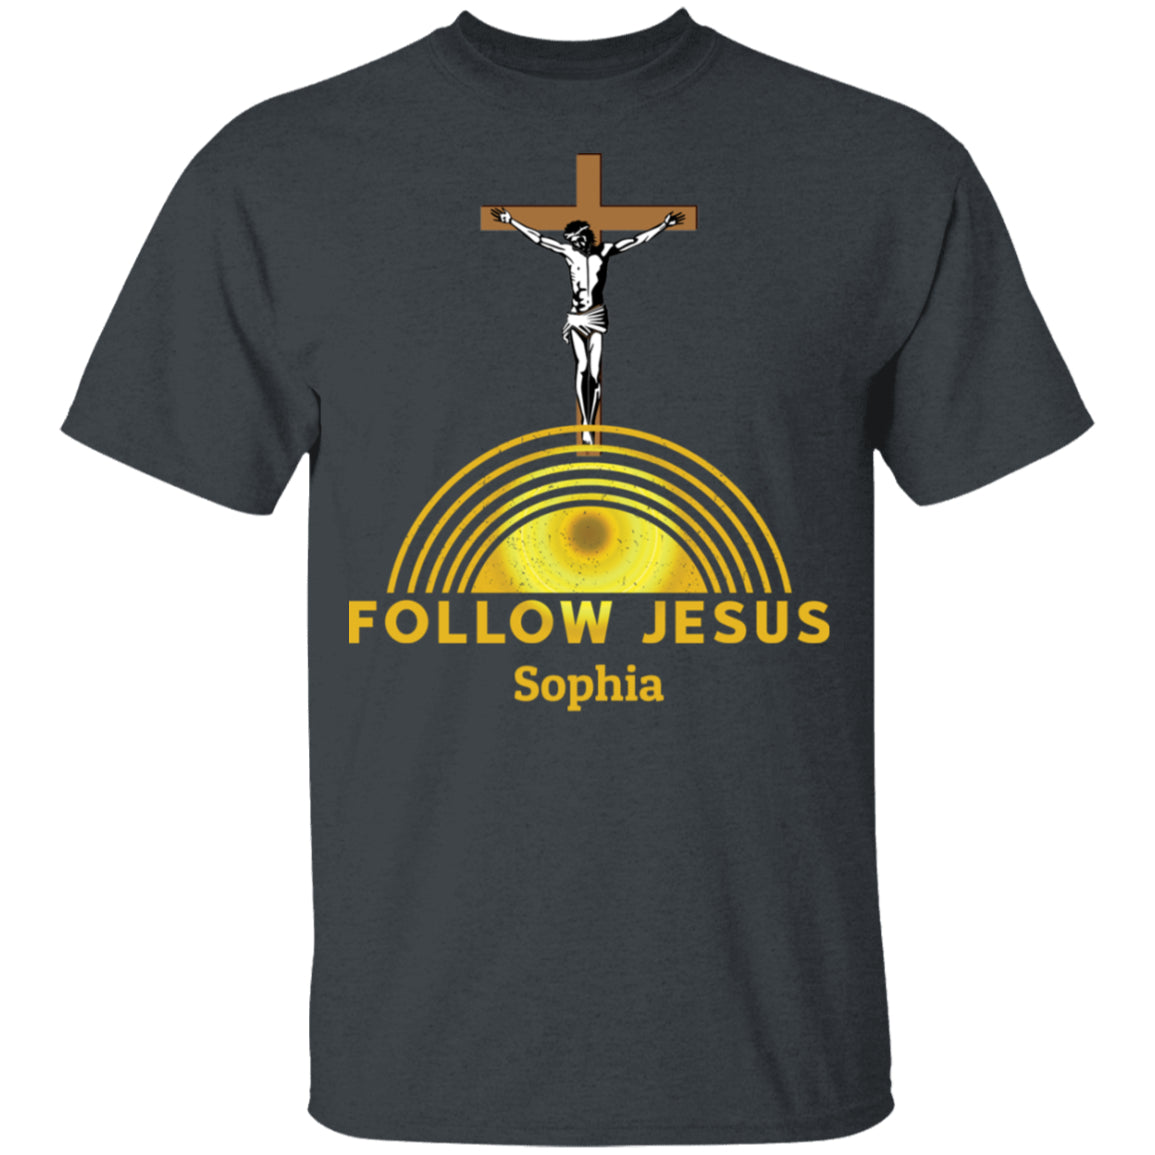 T-Shirts - Personalized Christian Themed Youth T-shirts - Follow Jesus